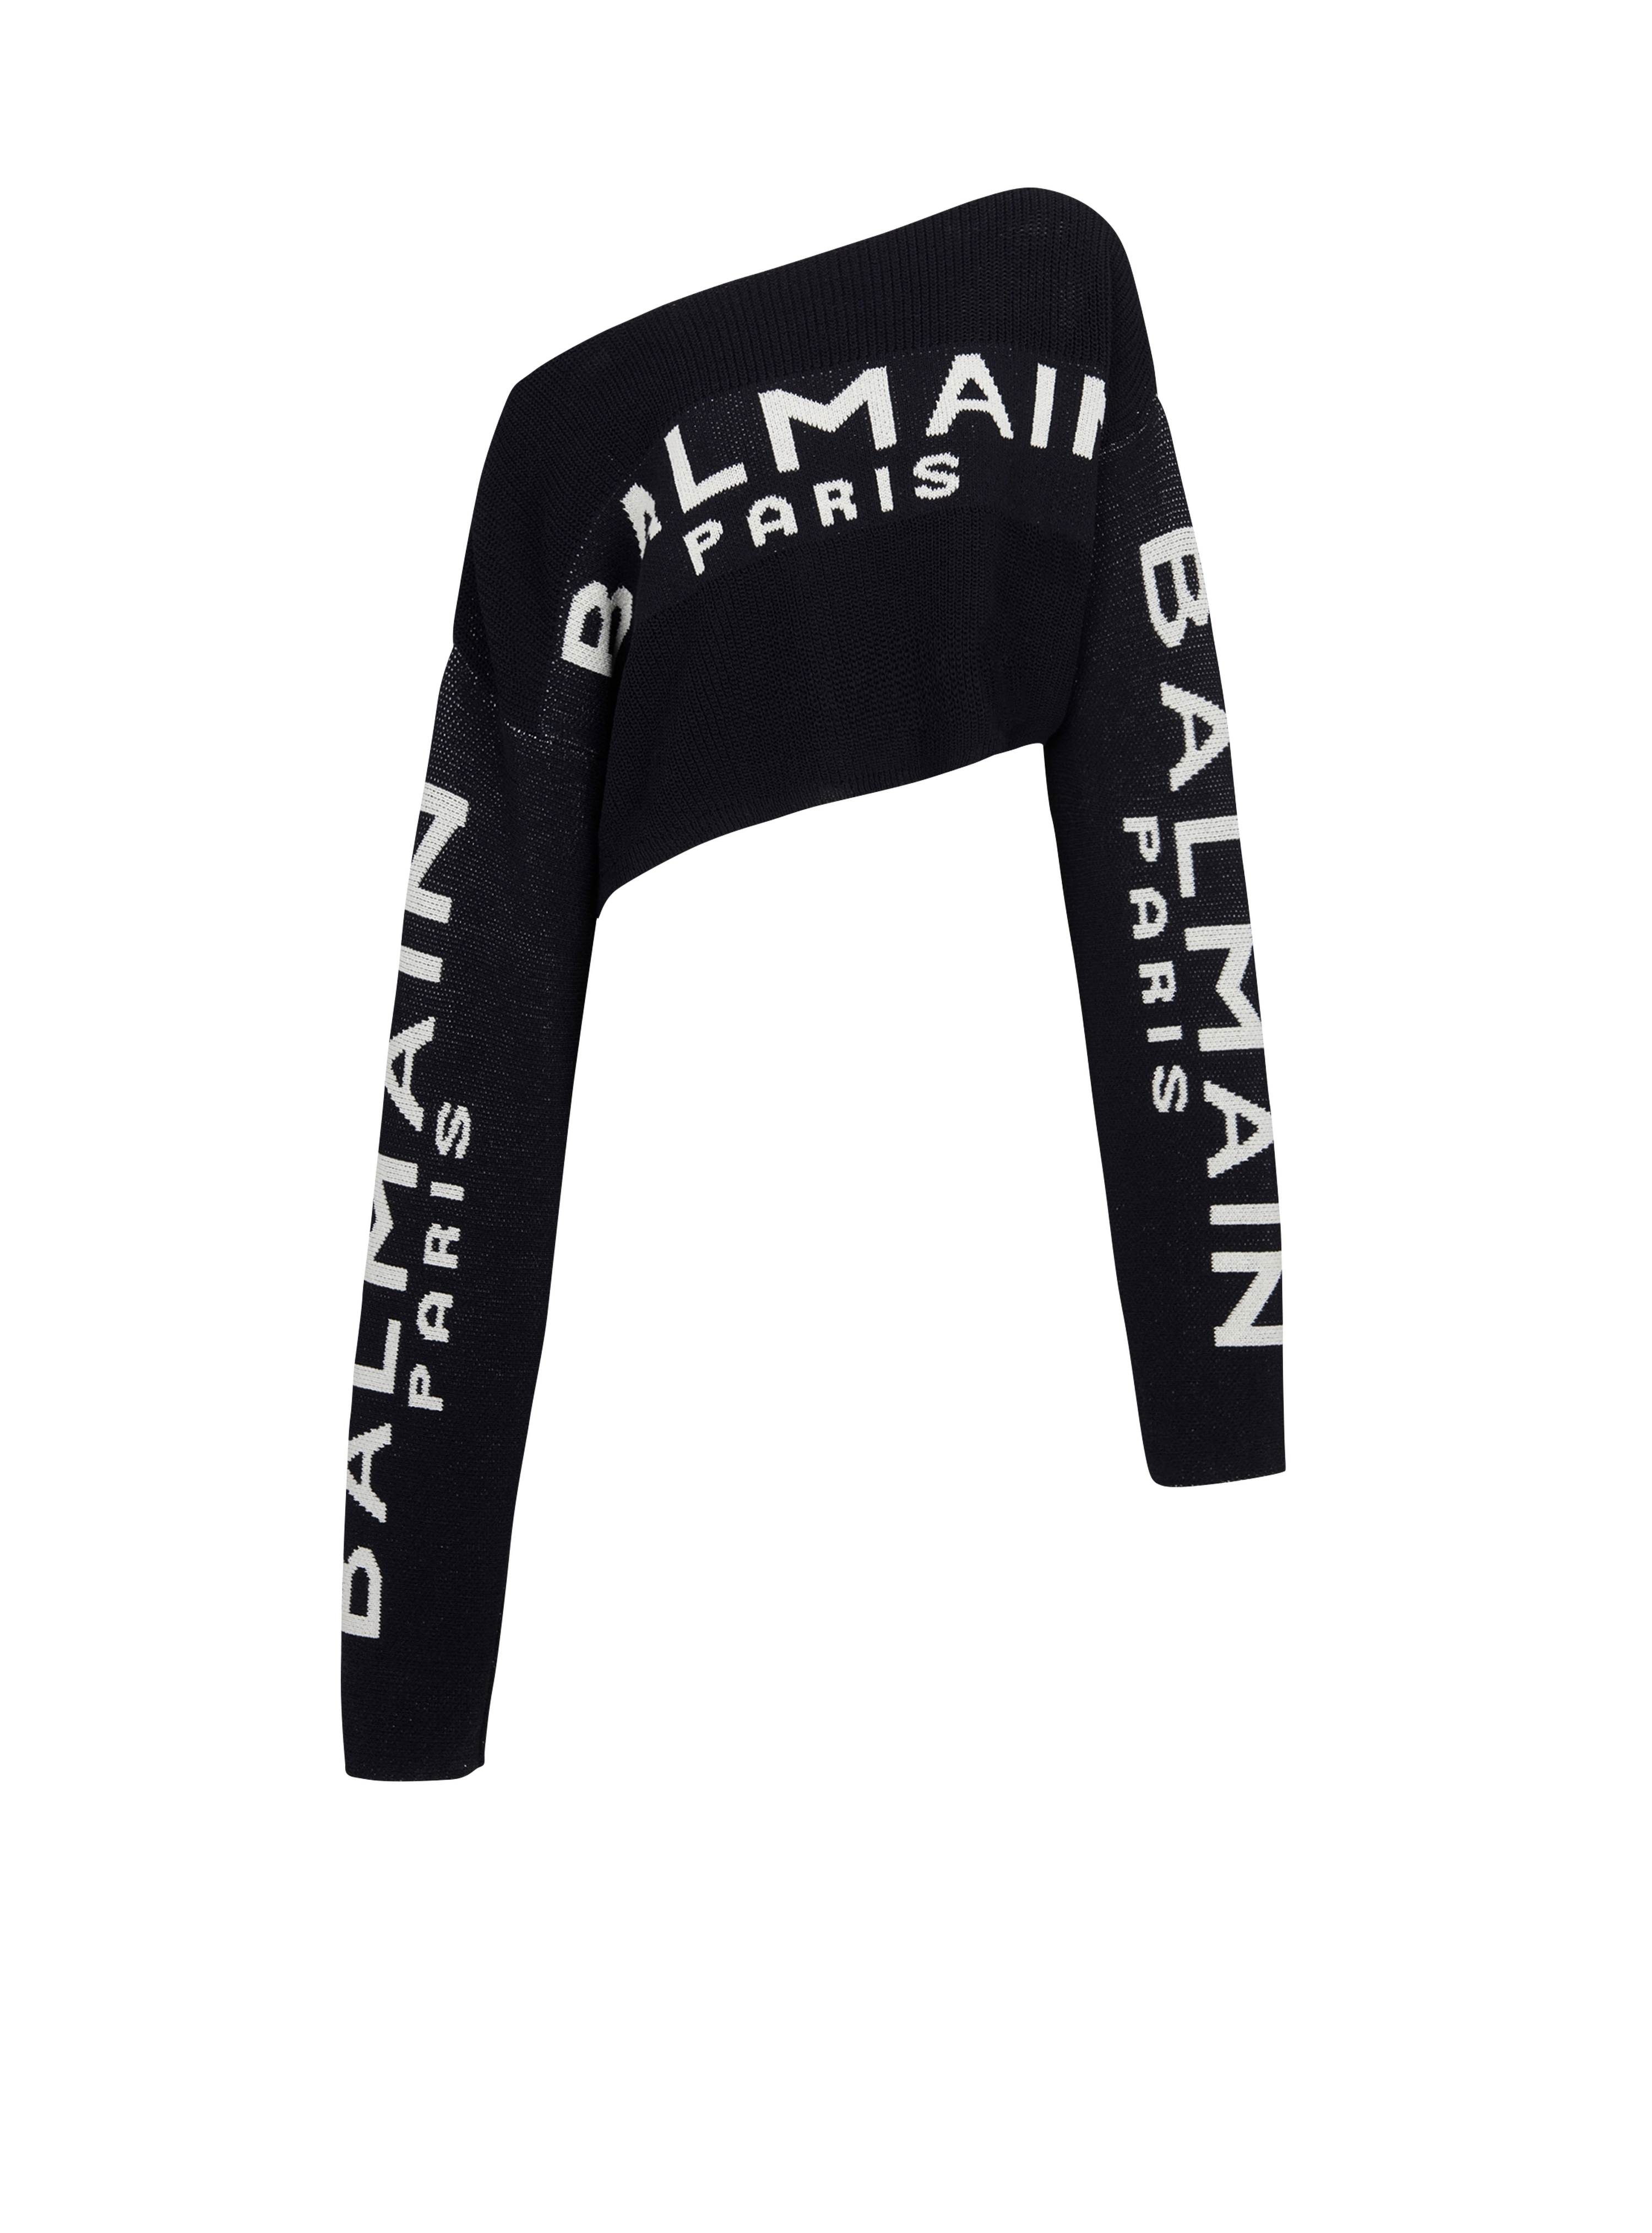 Cropped knit sweater with graffiti Balmain logo print, black, hi-res